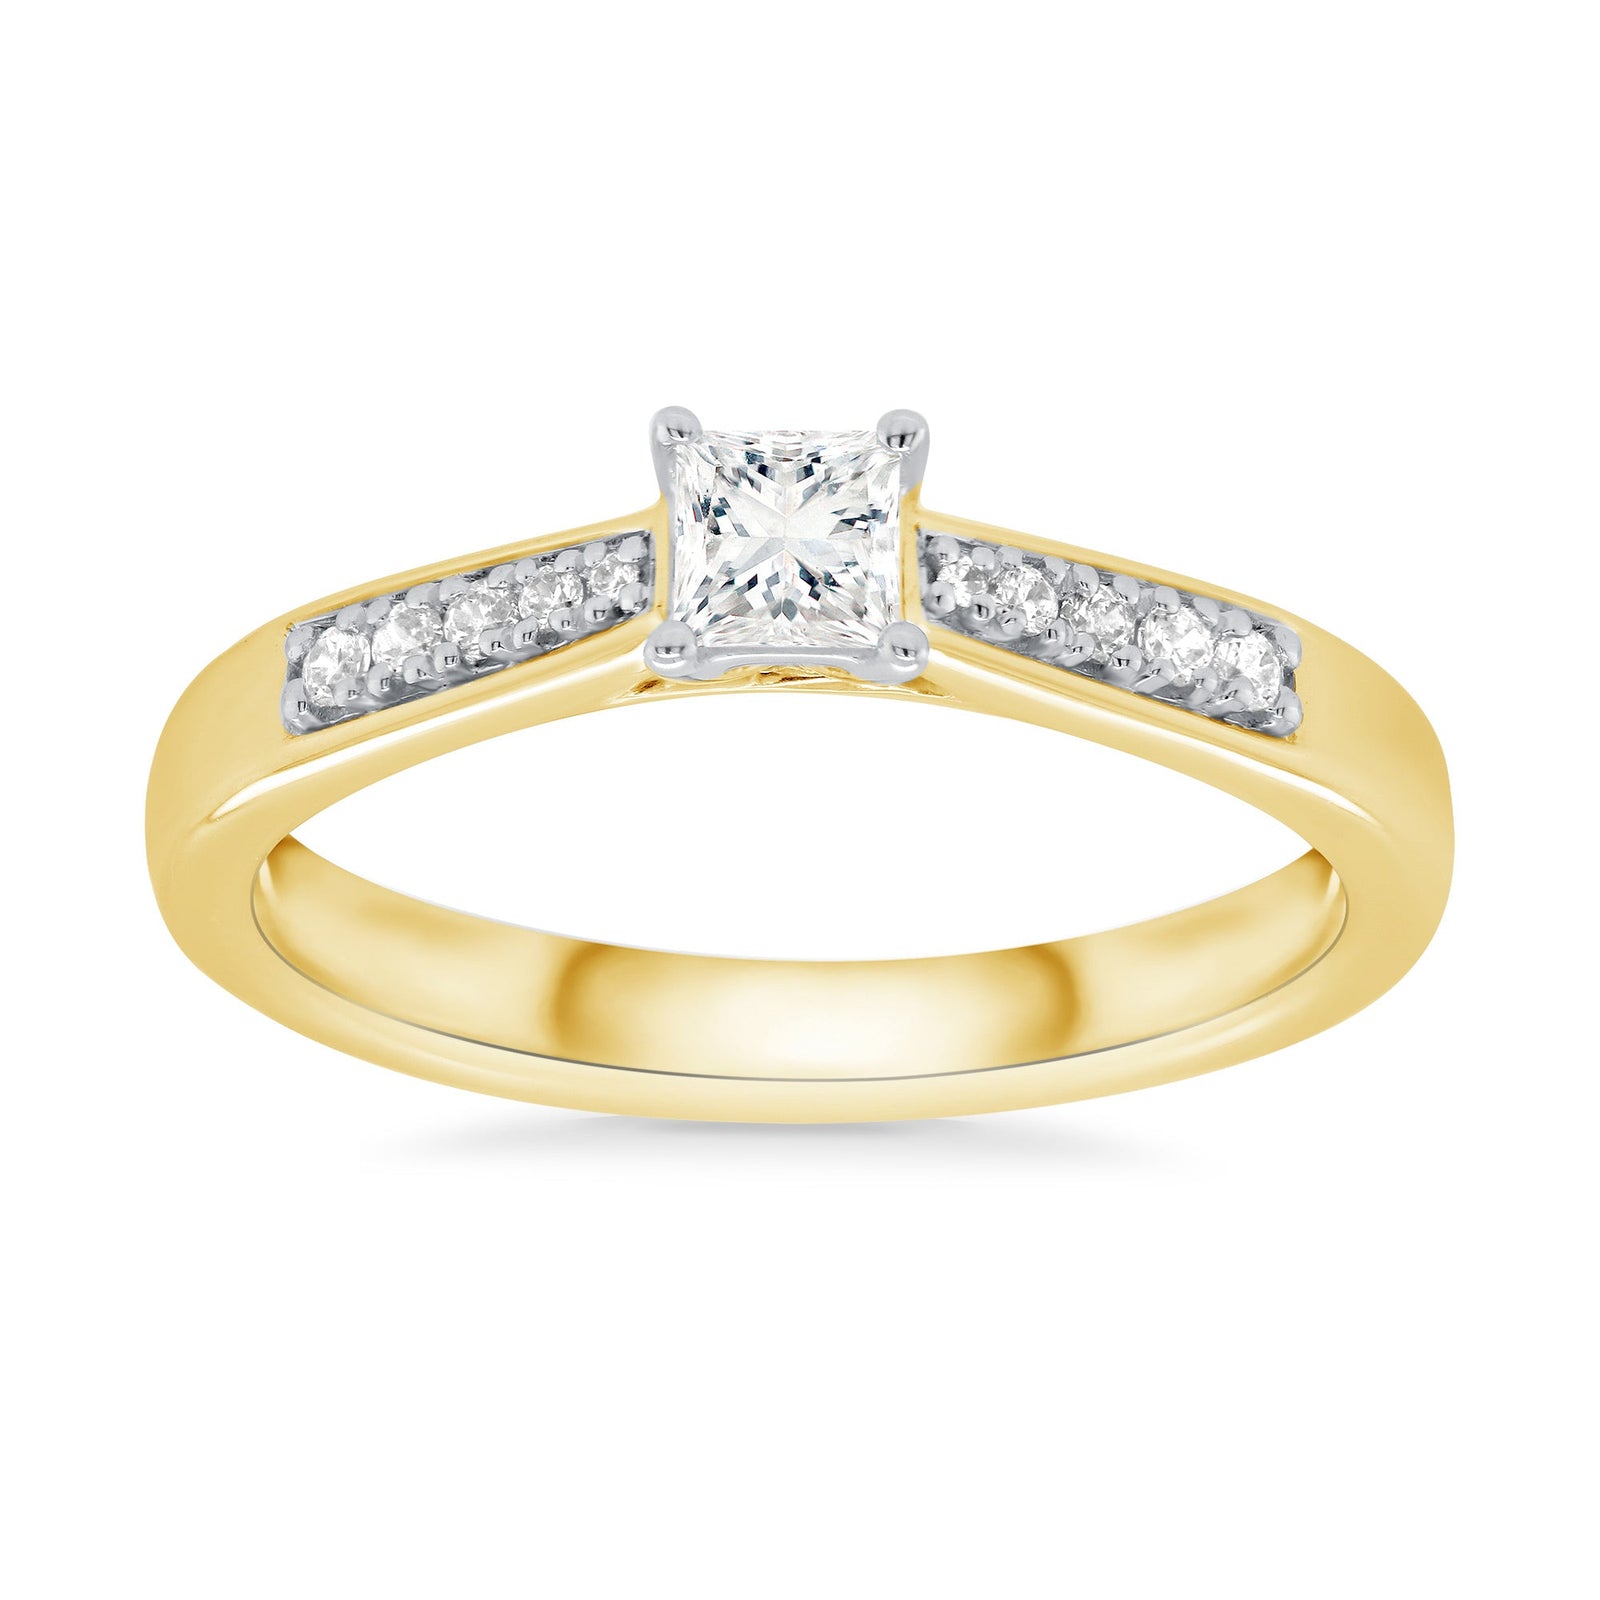 9ct gold princess cut single stone diamond ring with diamond set shoulders 0.33ct